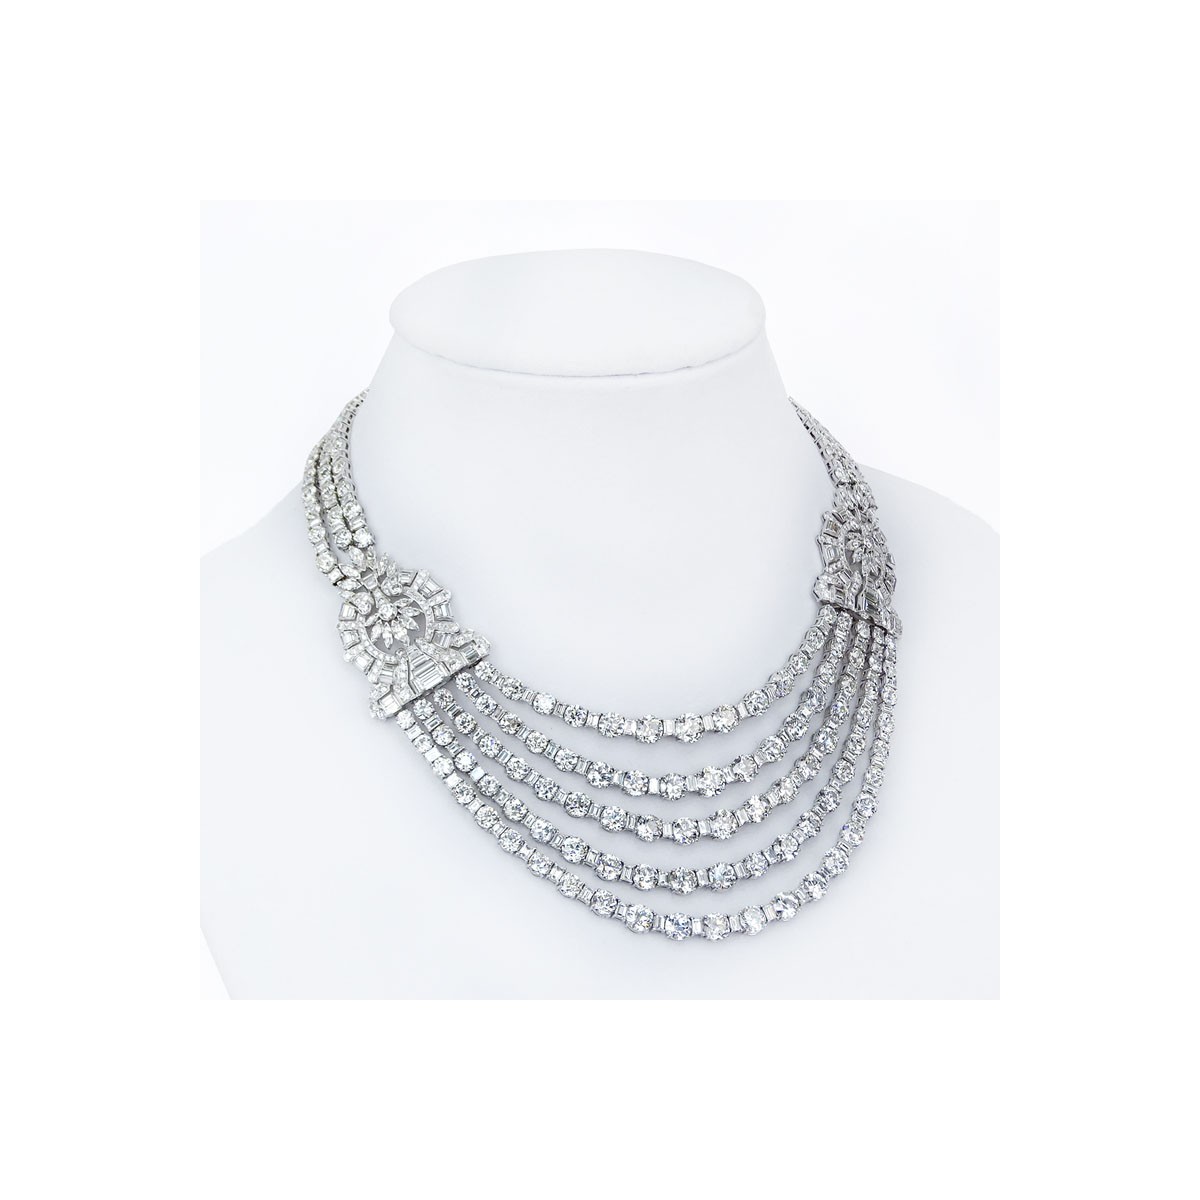 168.0ct Diamond and Platinum Necklace